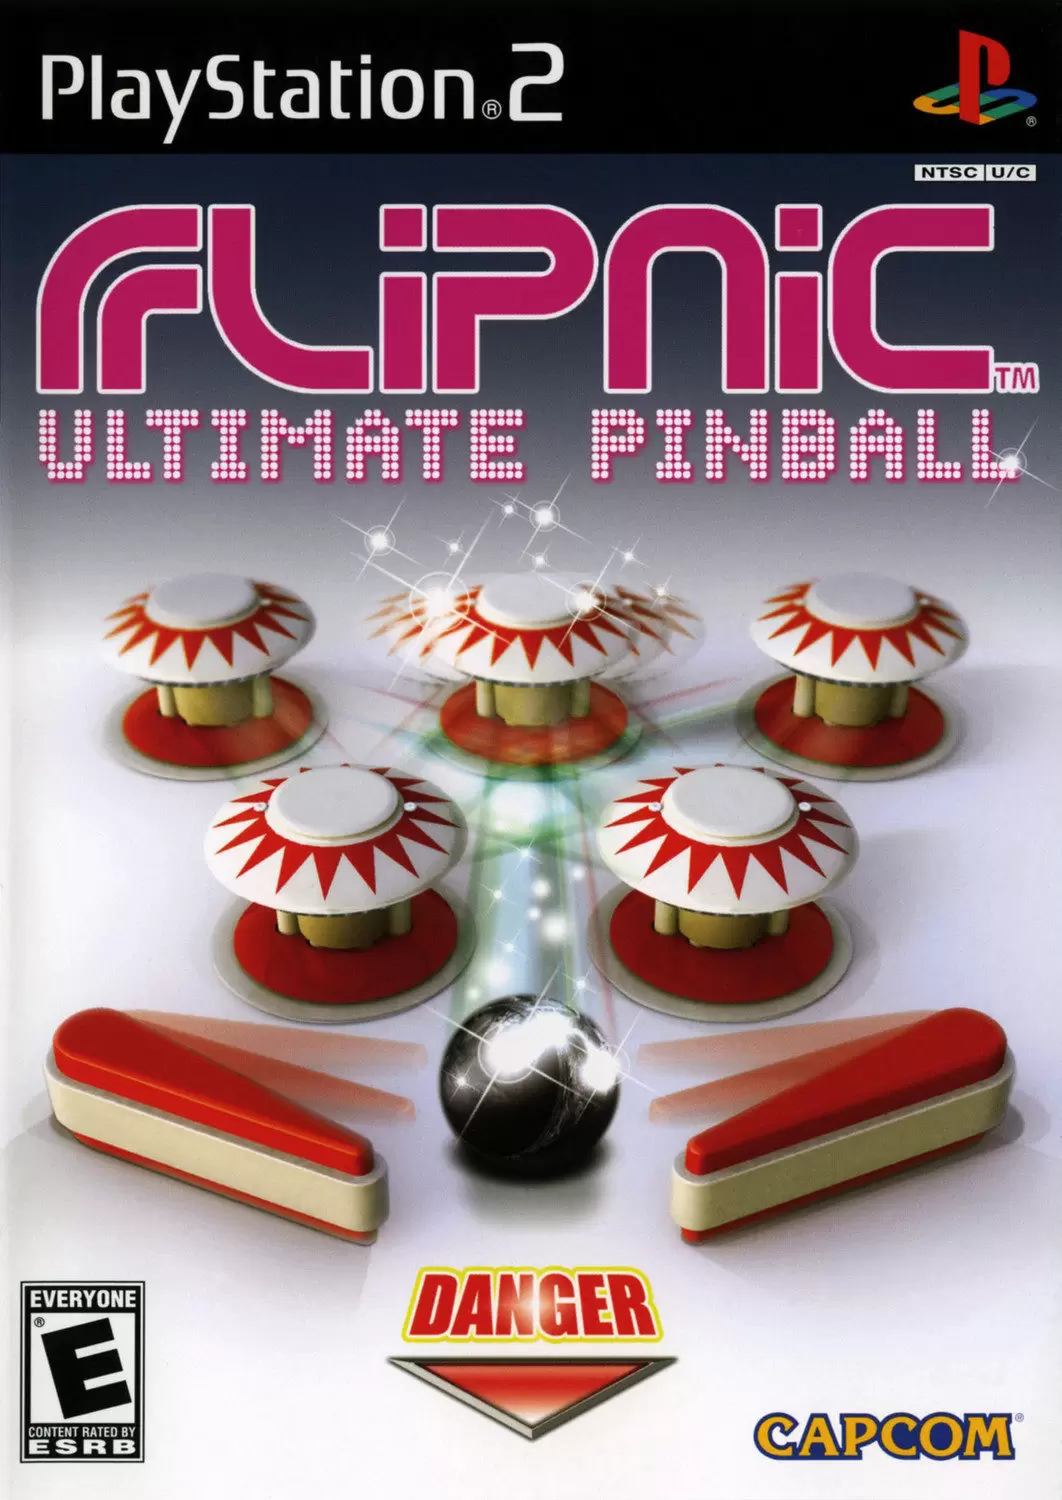 PS2 Games - Flipnic: Ultimate Pinball